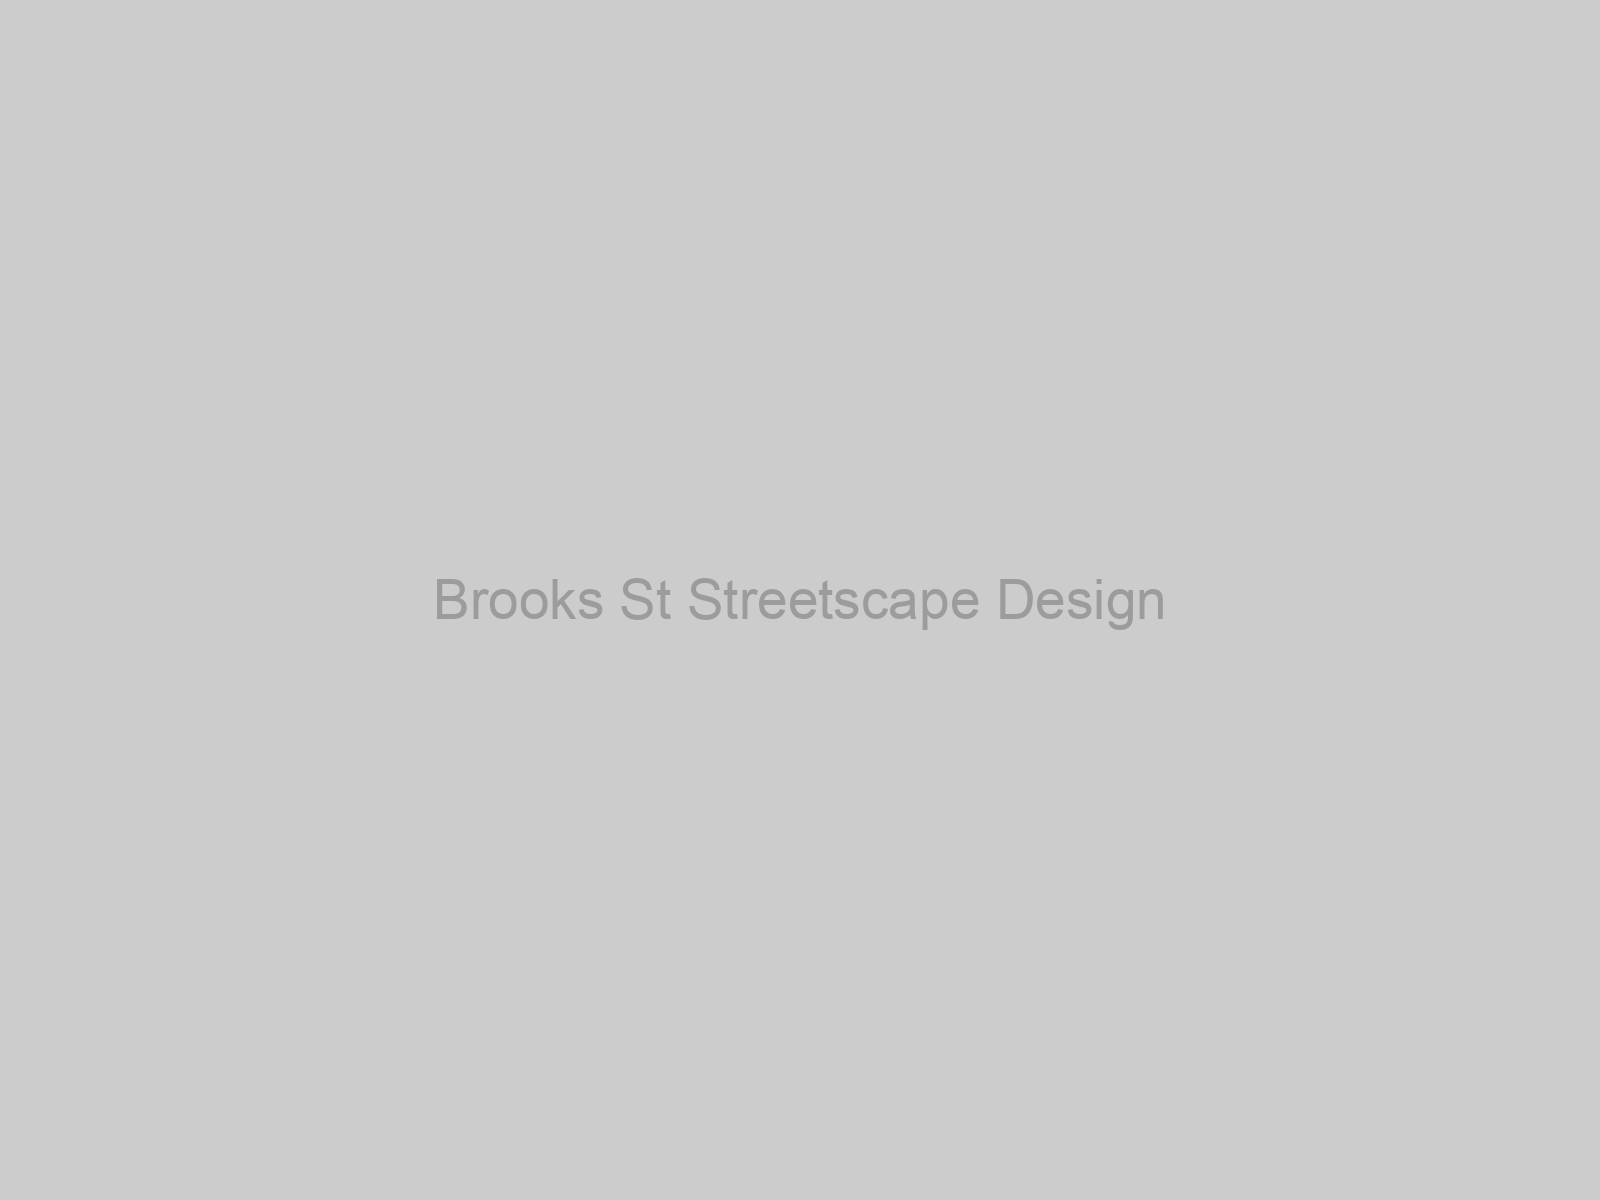 Brooks St Streetscape Design